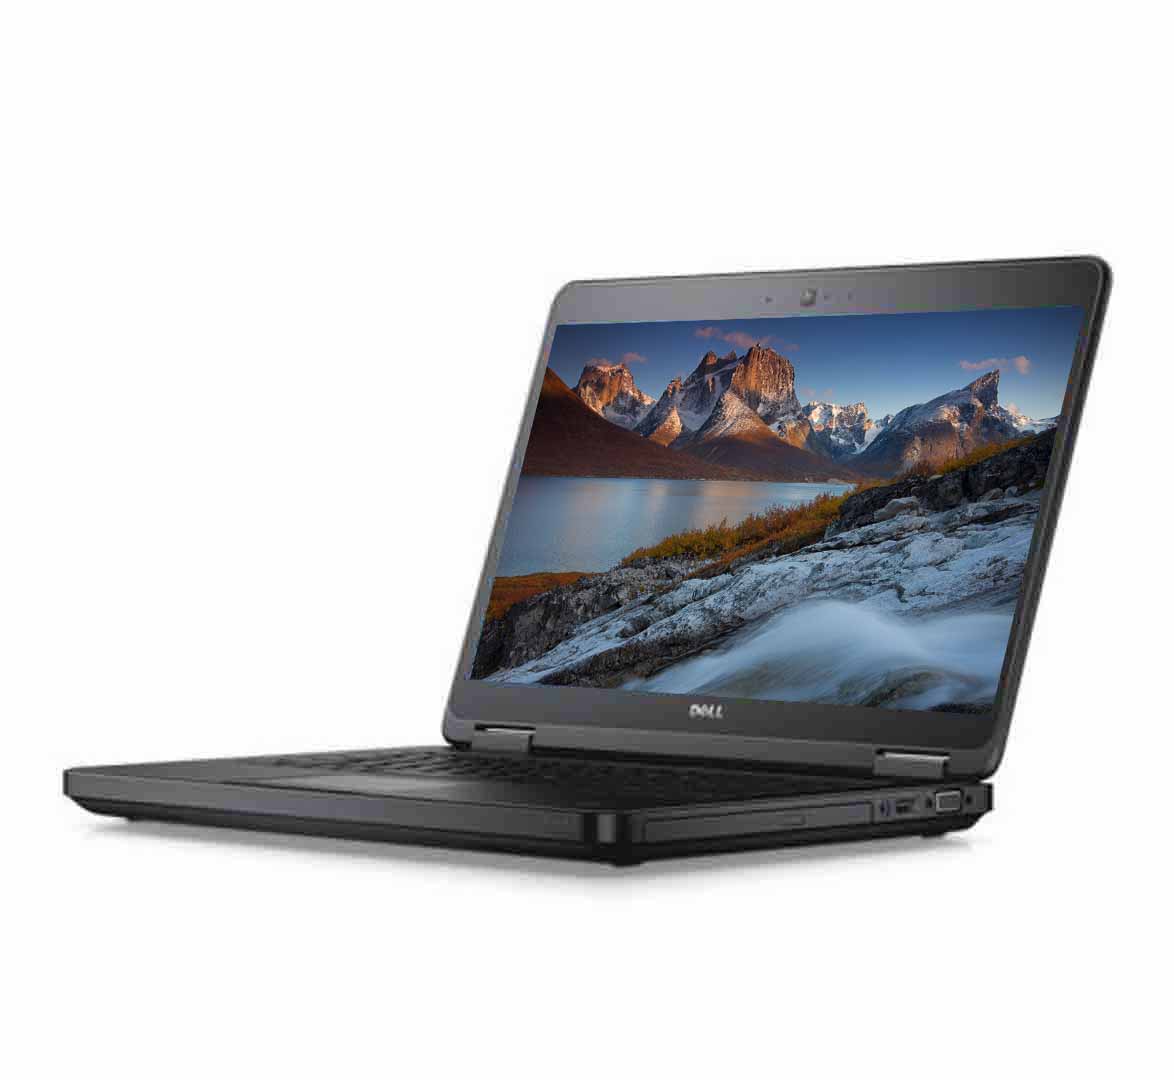 Dell Latitude E5440 Business Laptop, Intel Core i3-4th Generation CPU, 8GB RAM, 256GB SSD, 14 inch Display, Win 10 Pro